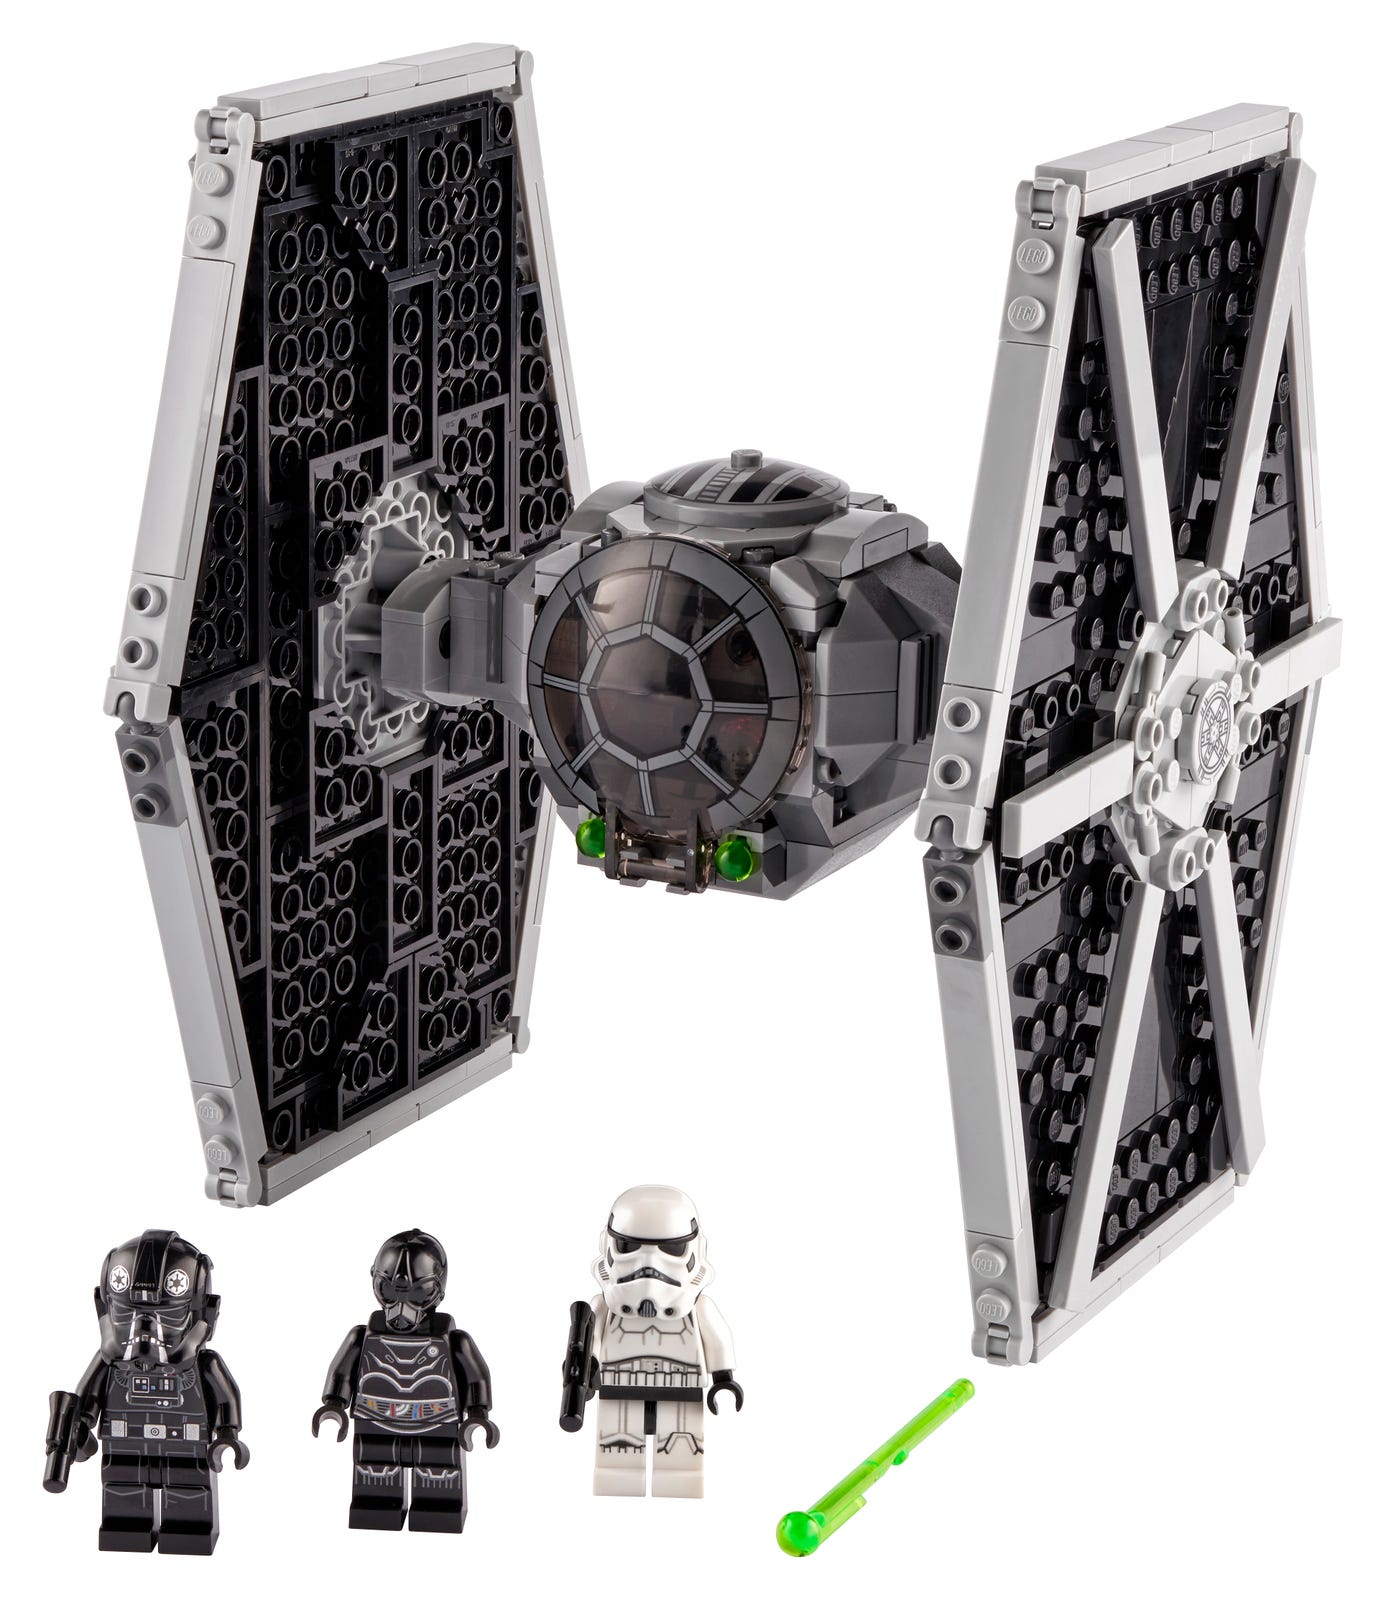 LEGO® Star Wars™ 75300 - Imperial TIE Fighter™